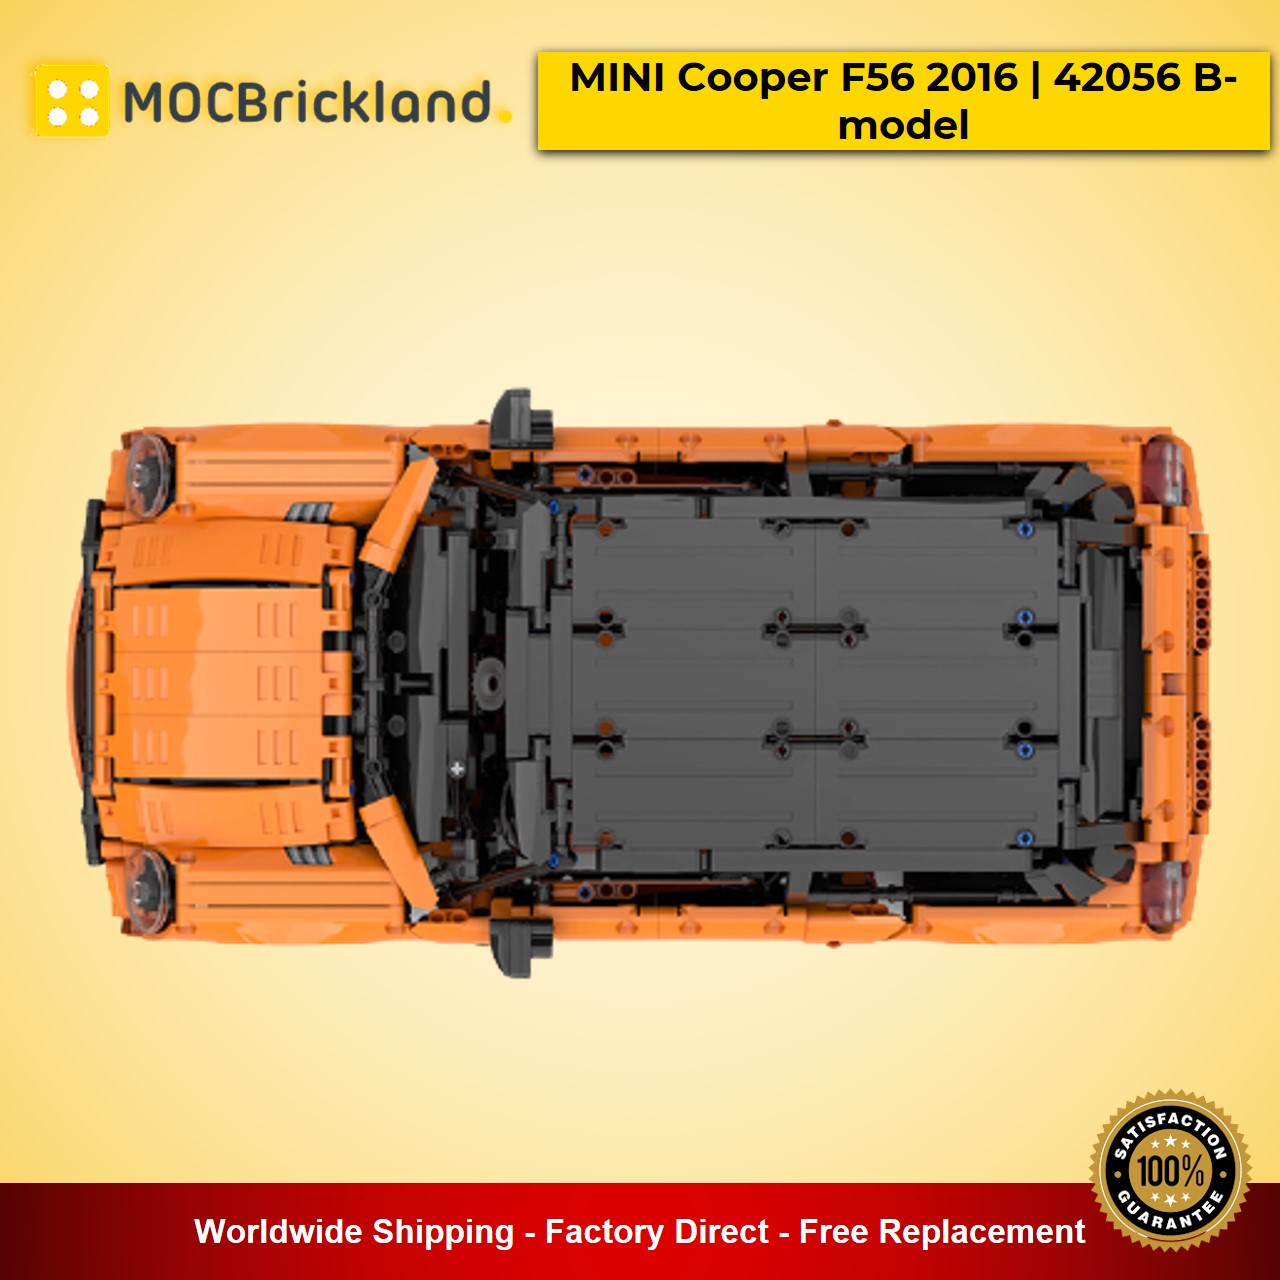 MOCBRICKLAND MOC-36559 MINI Cooper F56 2016 | 42056 B-model